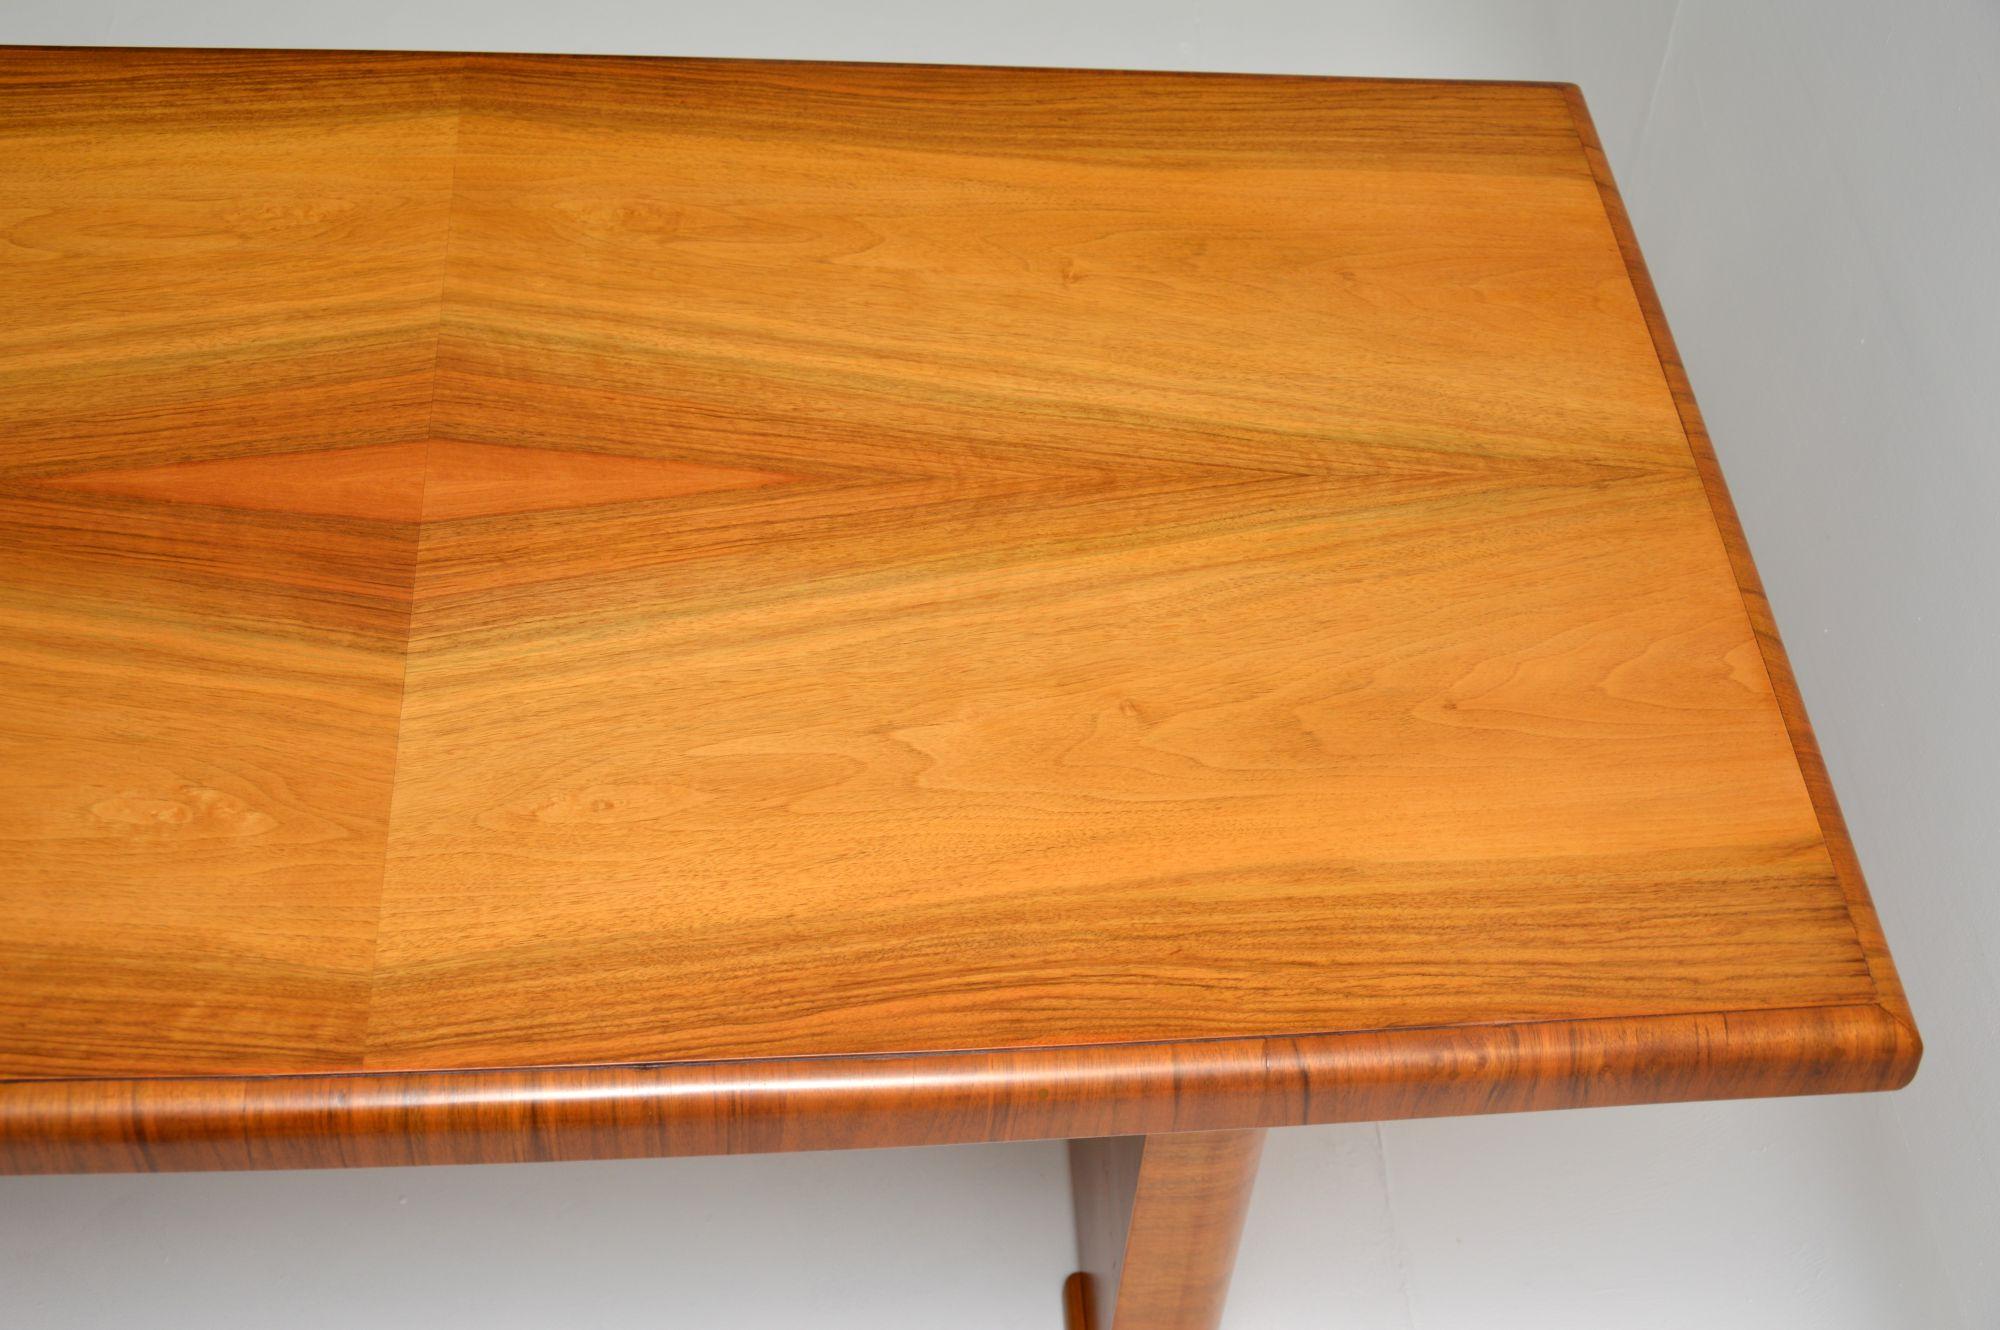 20th Century Art Deco Figured Walnut Dining Table / Desk